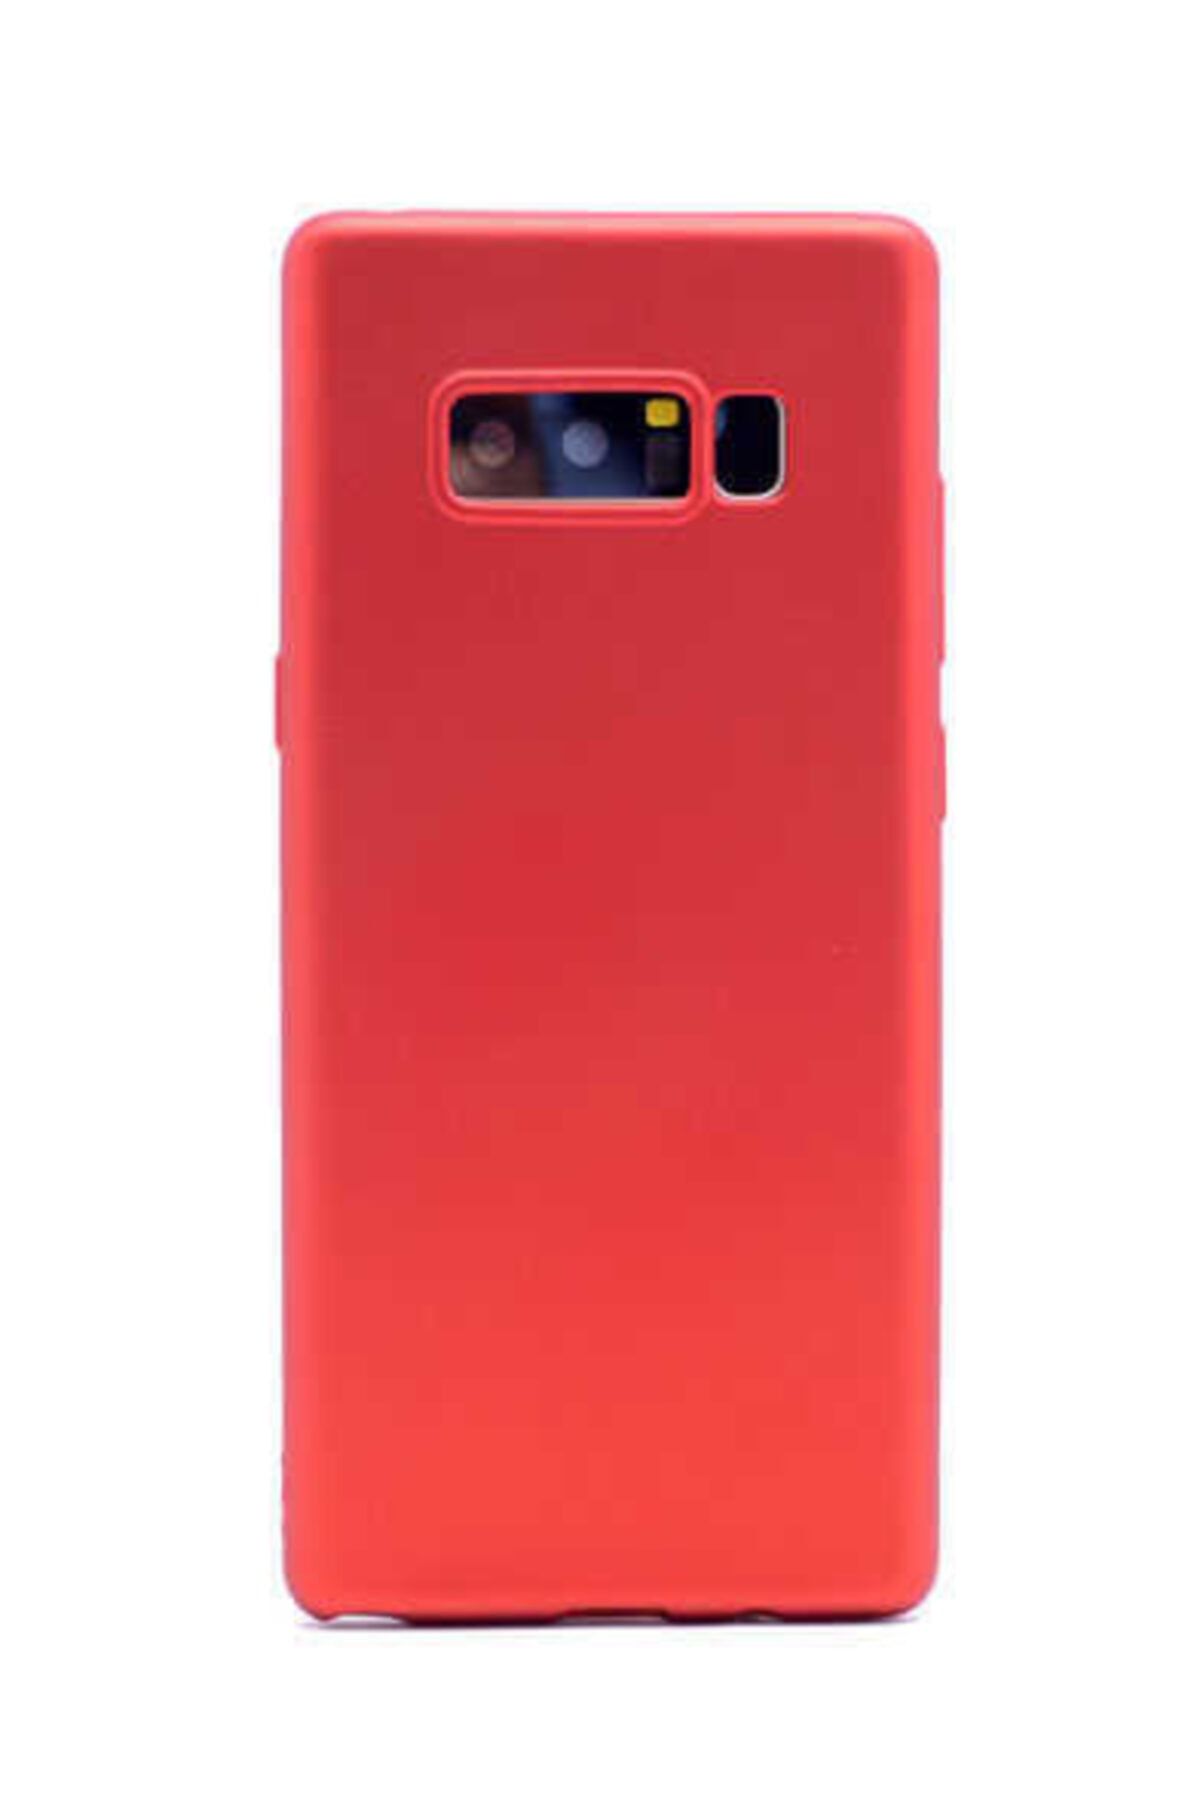 İncisoft Galaxy Note 8 Uyumlu Ince Yumuşak Soft Tasarım Renkli Silikon Kılıf